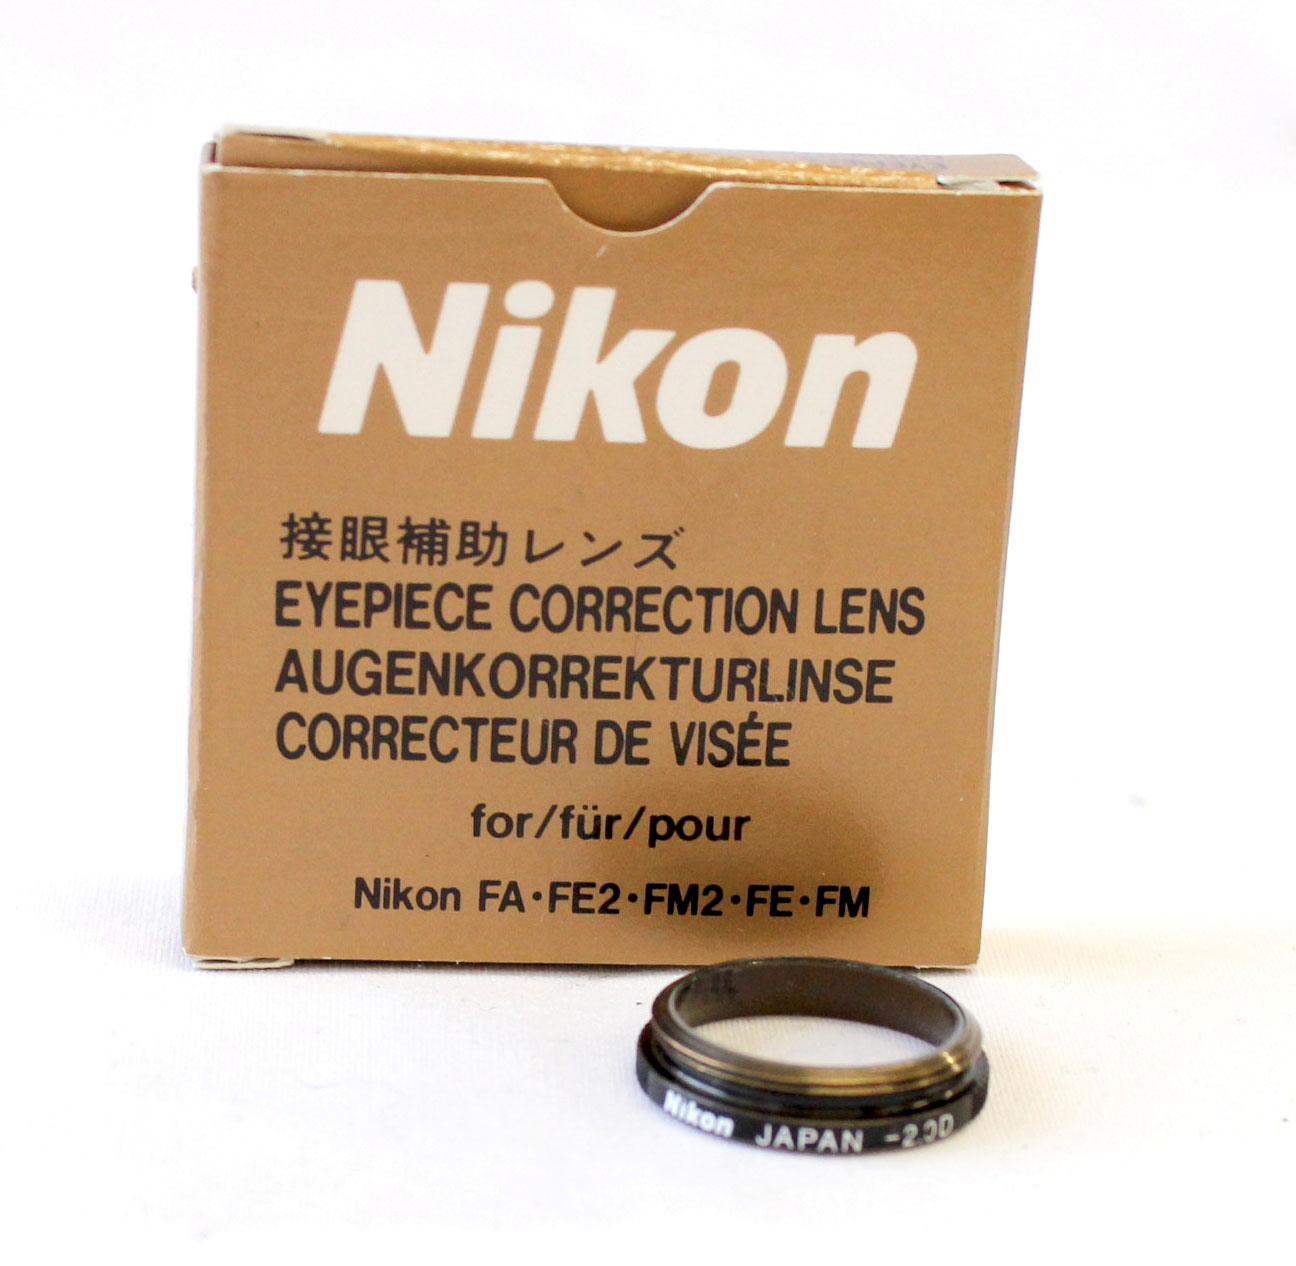 Nikon Eyepiece Correction Lens -2.0 Diopter for Nikon FA, FE2, FM2, FE, FM from Japan